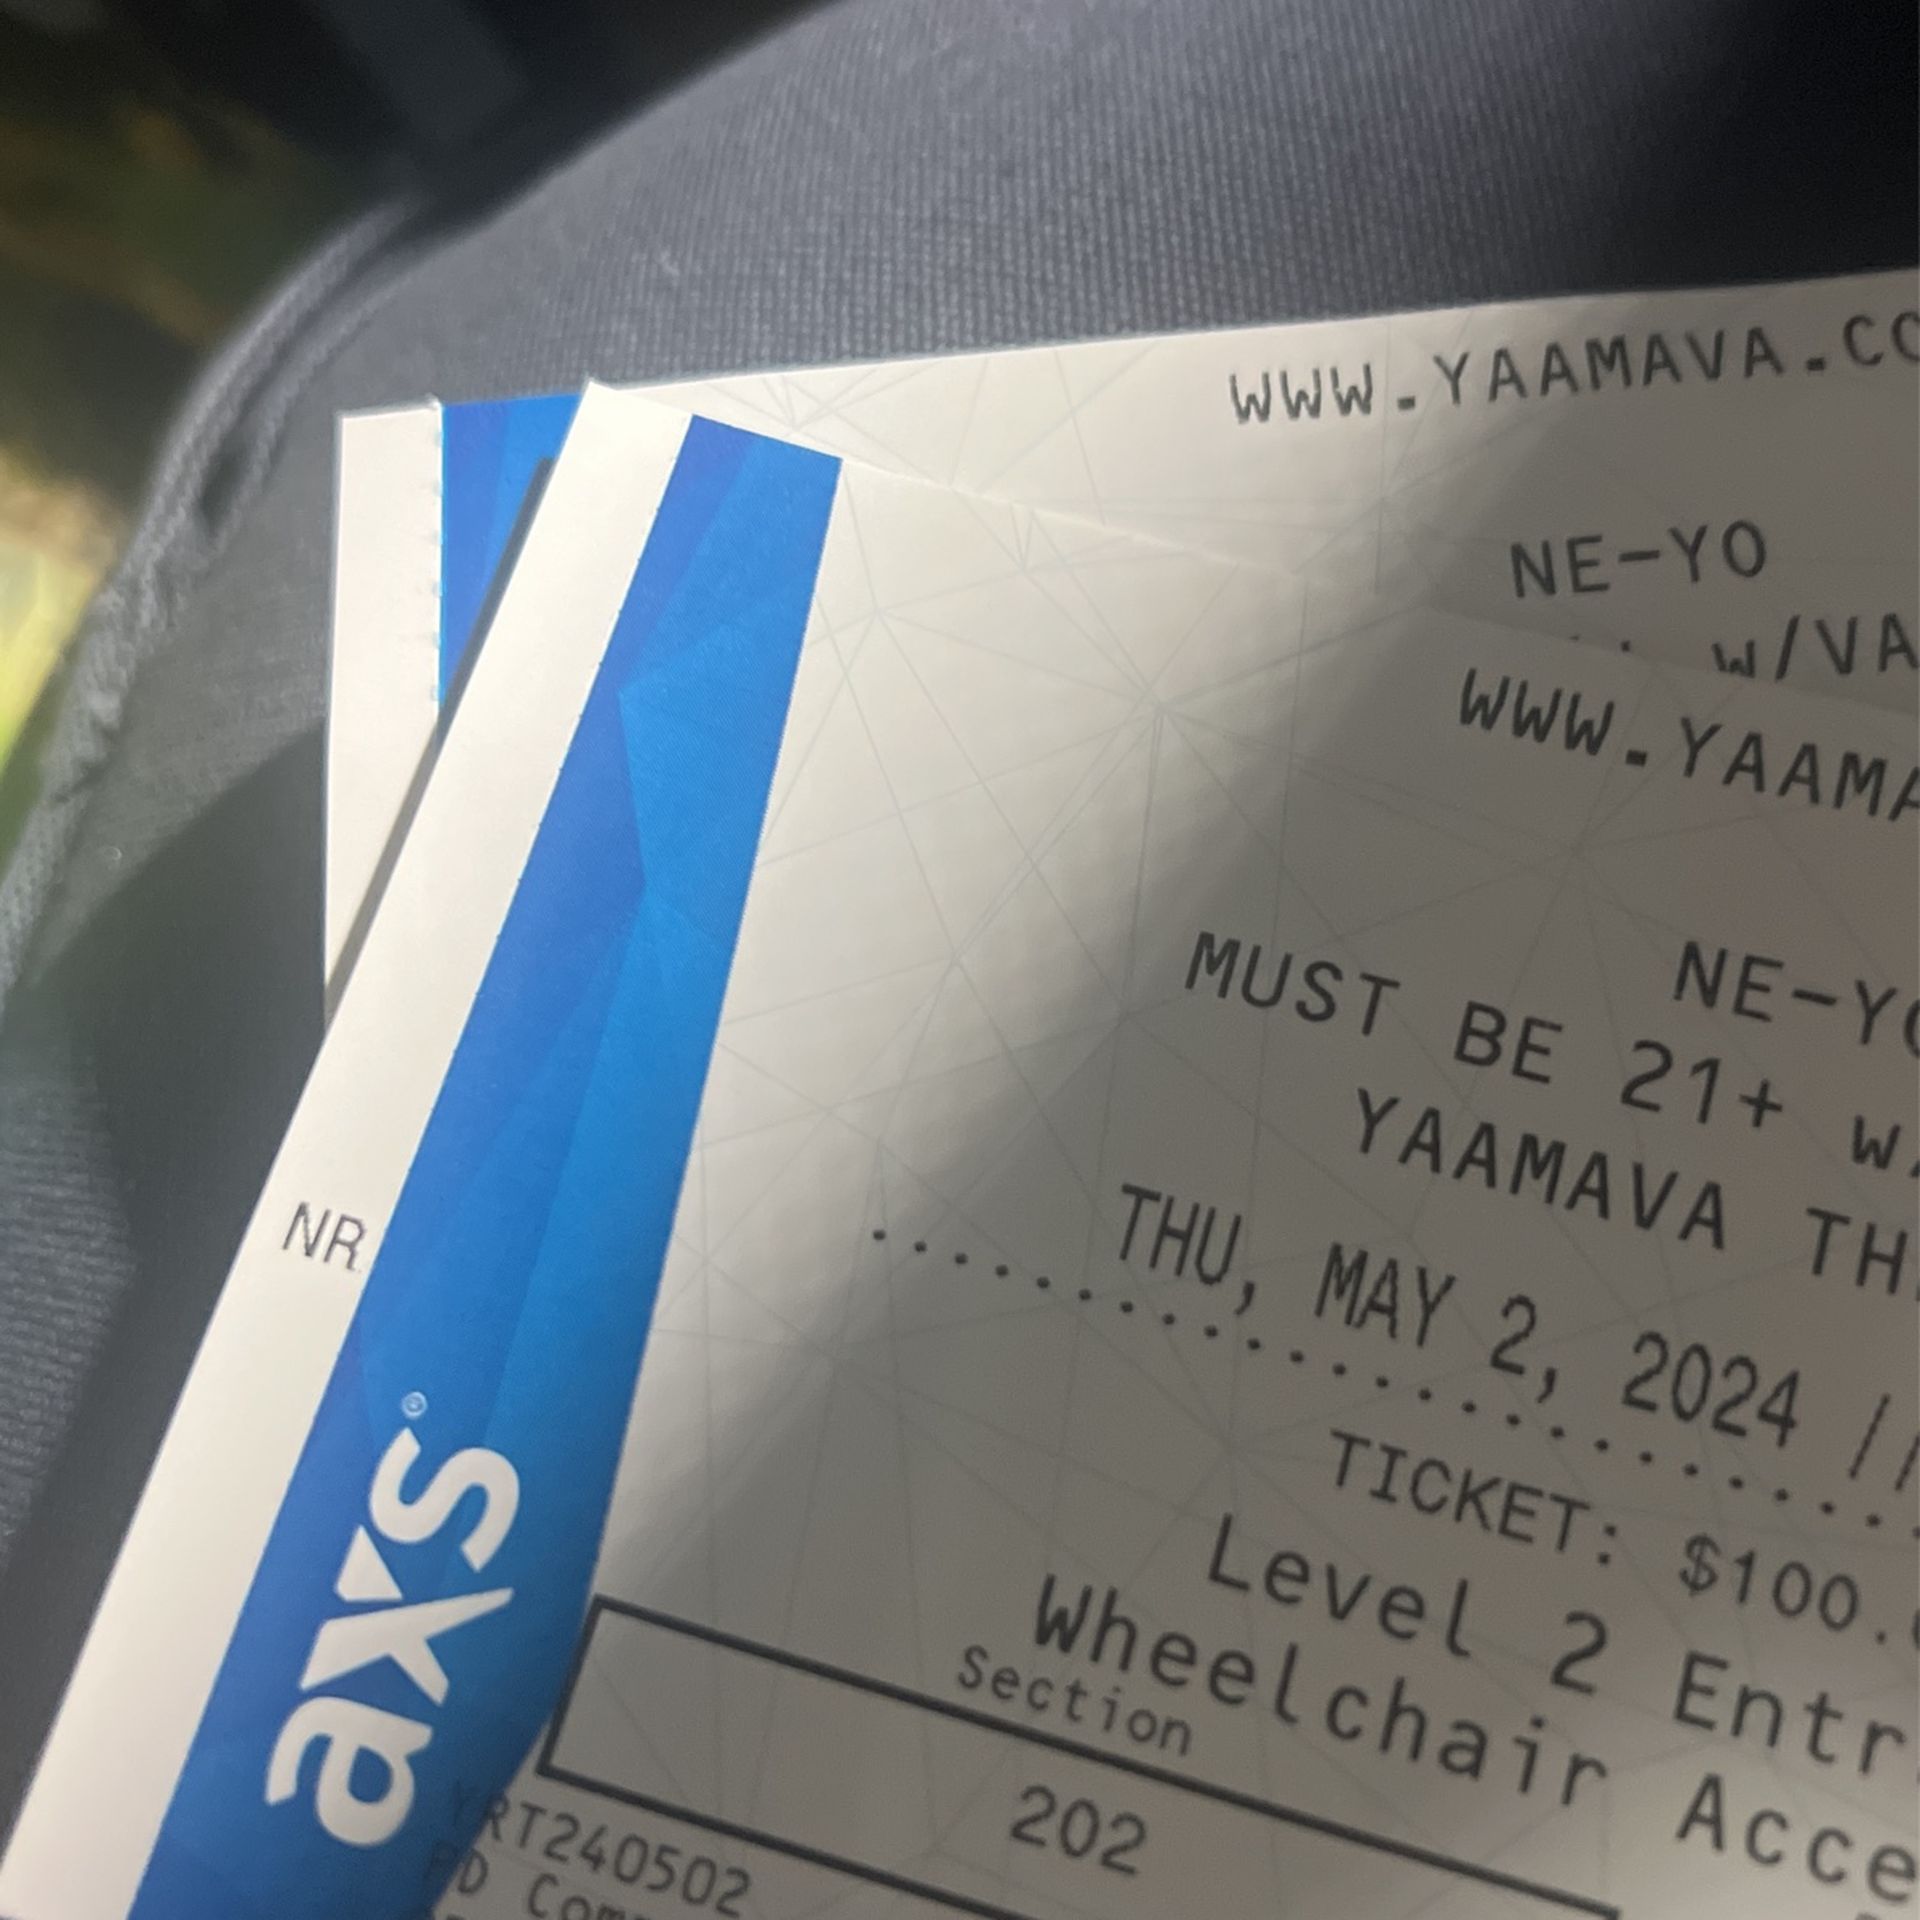 2 Tickets For NE-YO At Yaamava Theater 